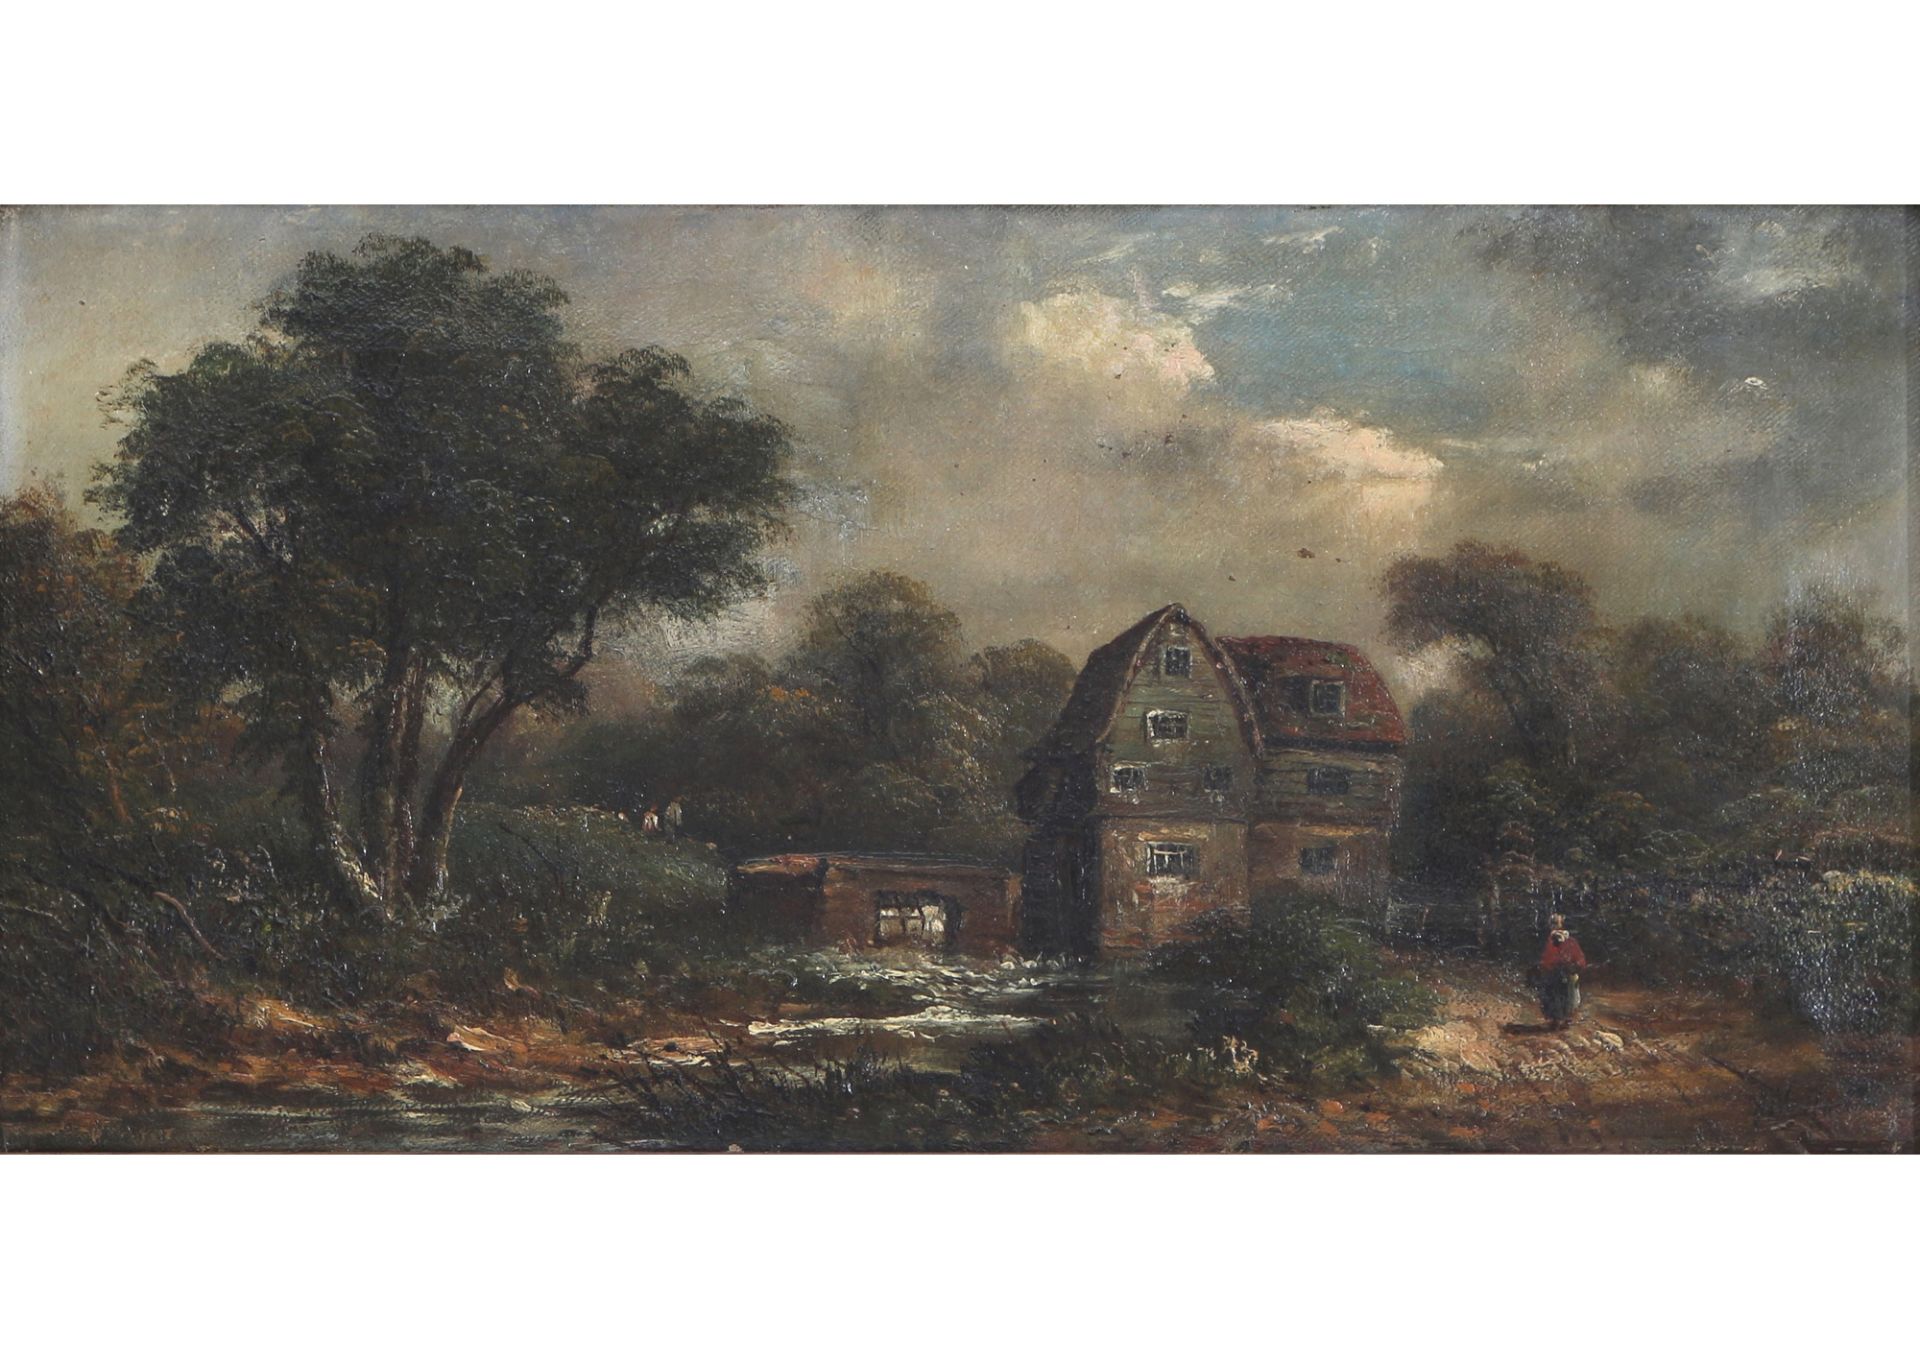 John Westall (act.1873-1893) Wassermühle, watermill,